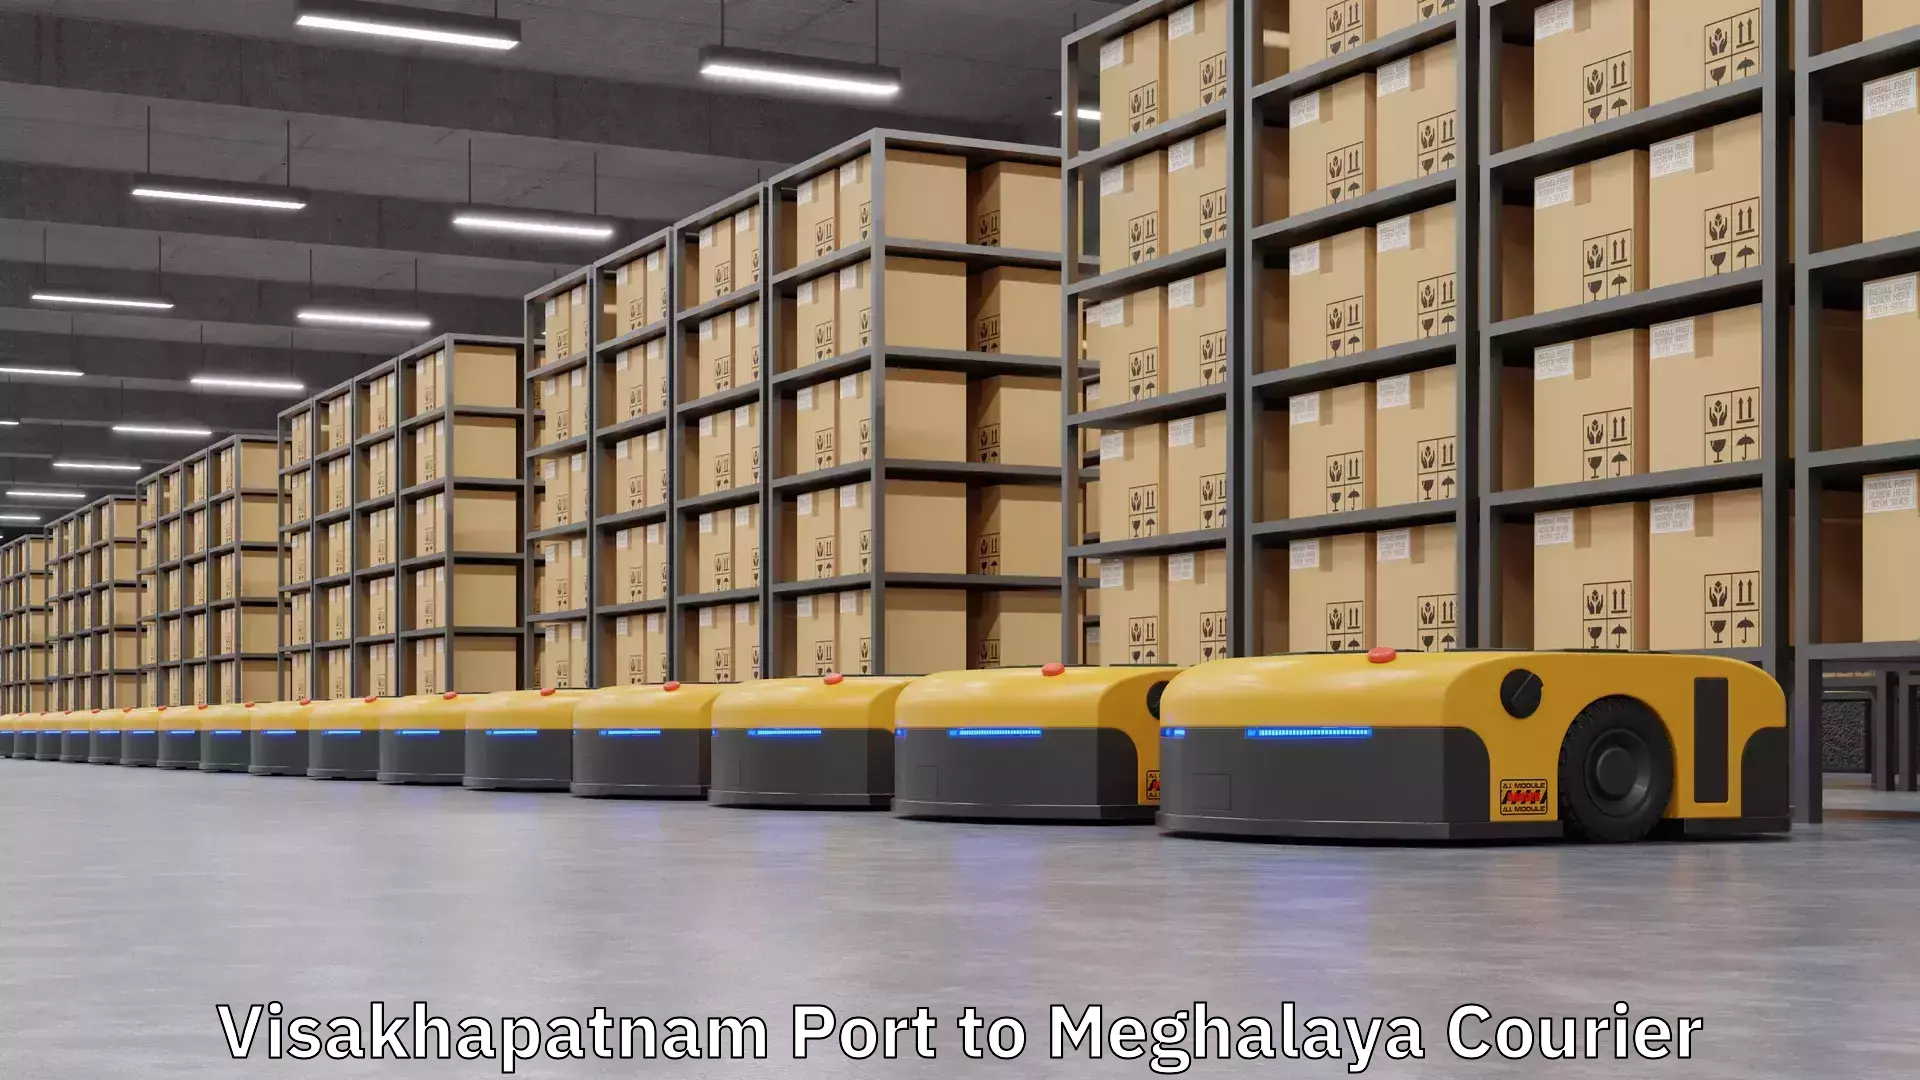 International courier networks Visakhapatnam Port to Meghalaya